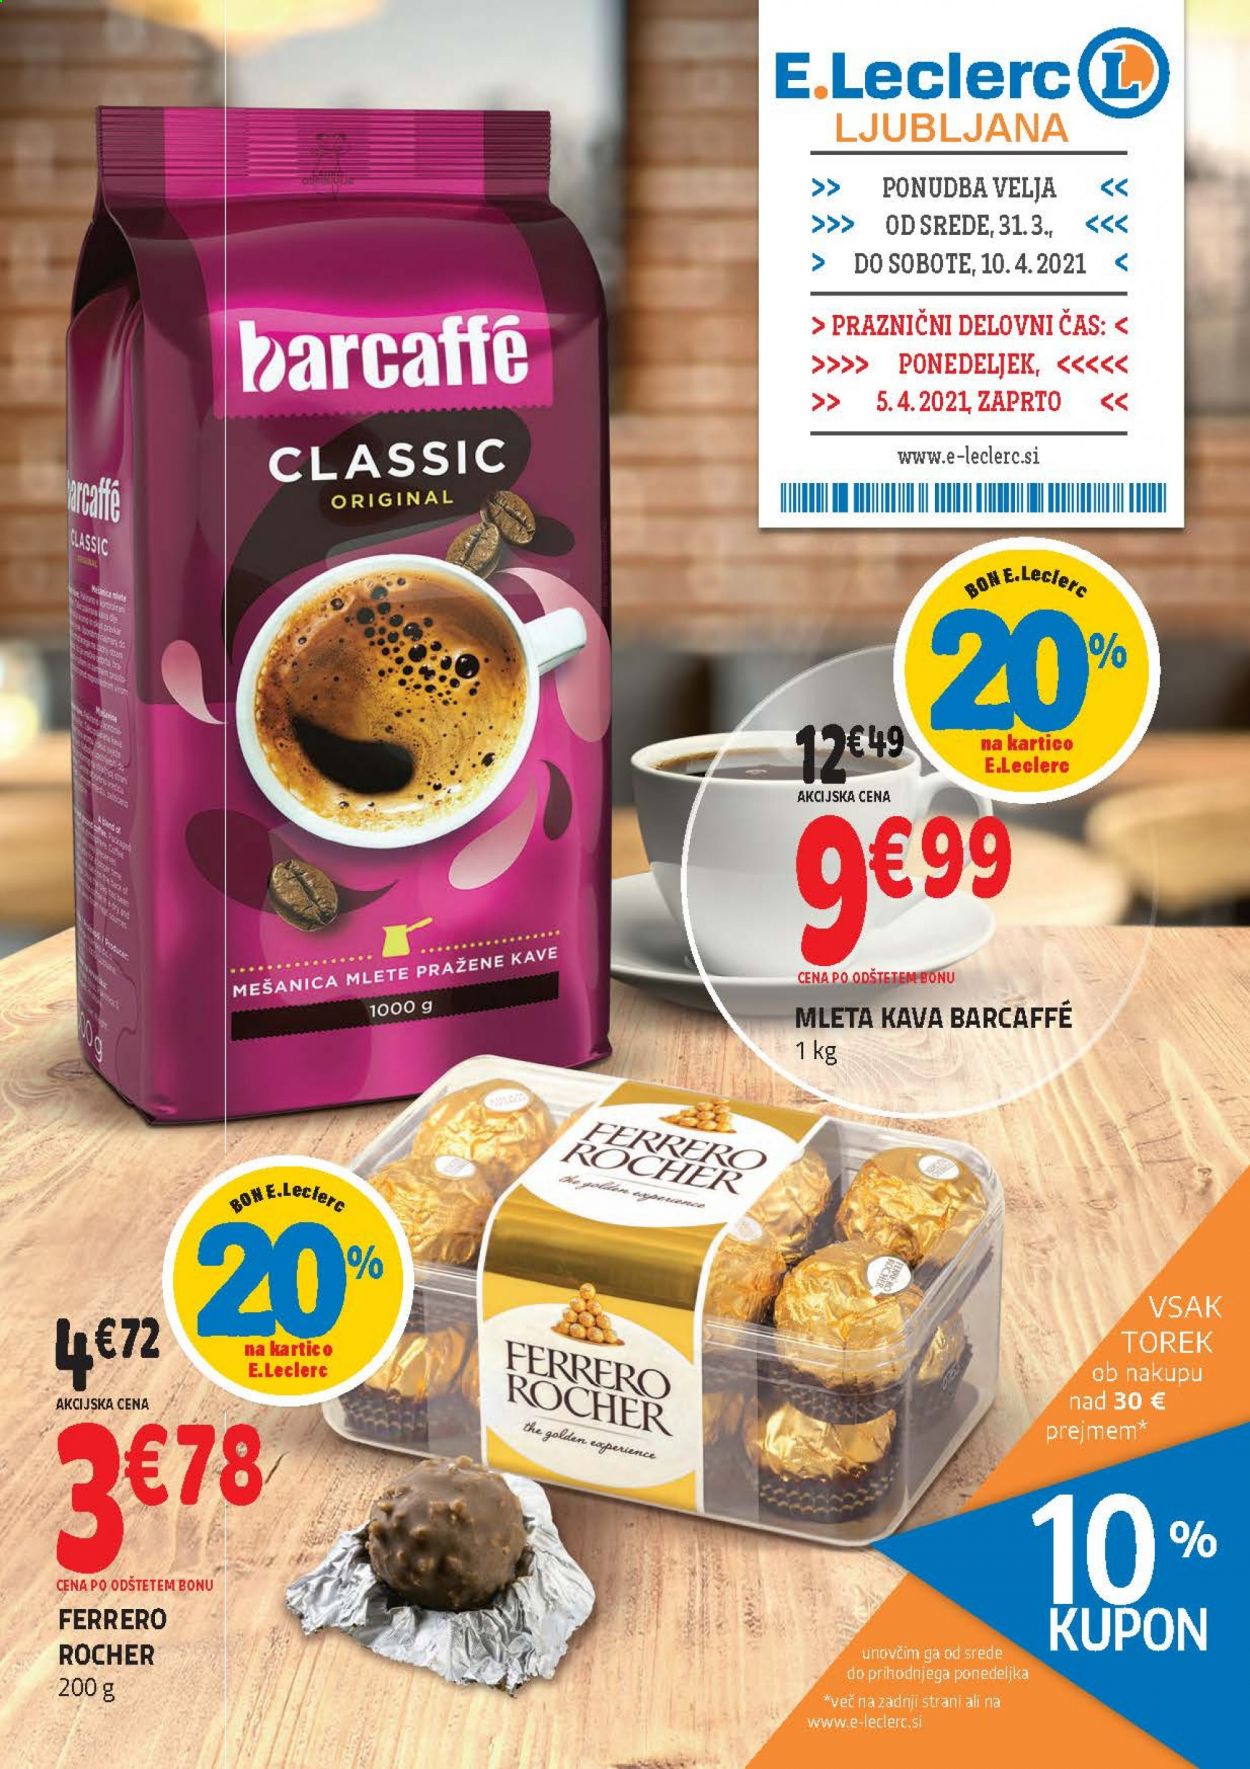 thumbnail - E.Leclerc katalog - 31.3.2021 - 10.4.2021 - Ponudba izdelkov - Barcaffé, kava. Stran 1.